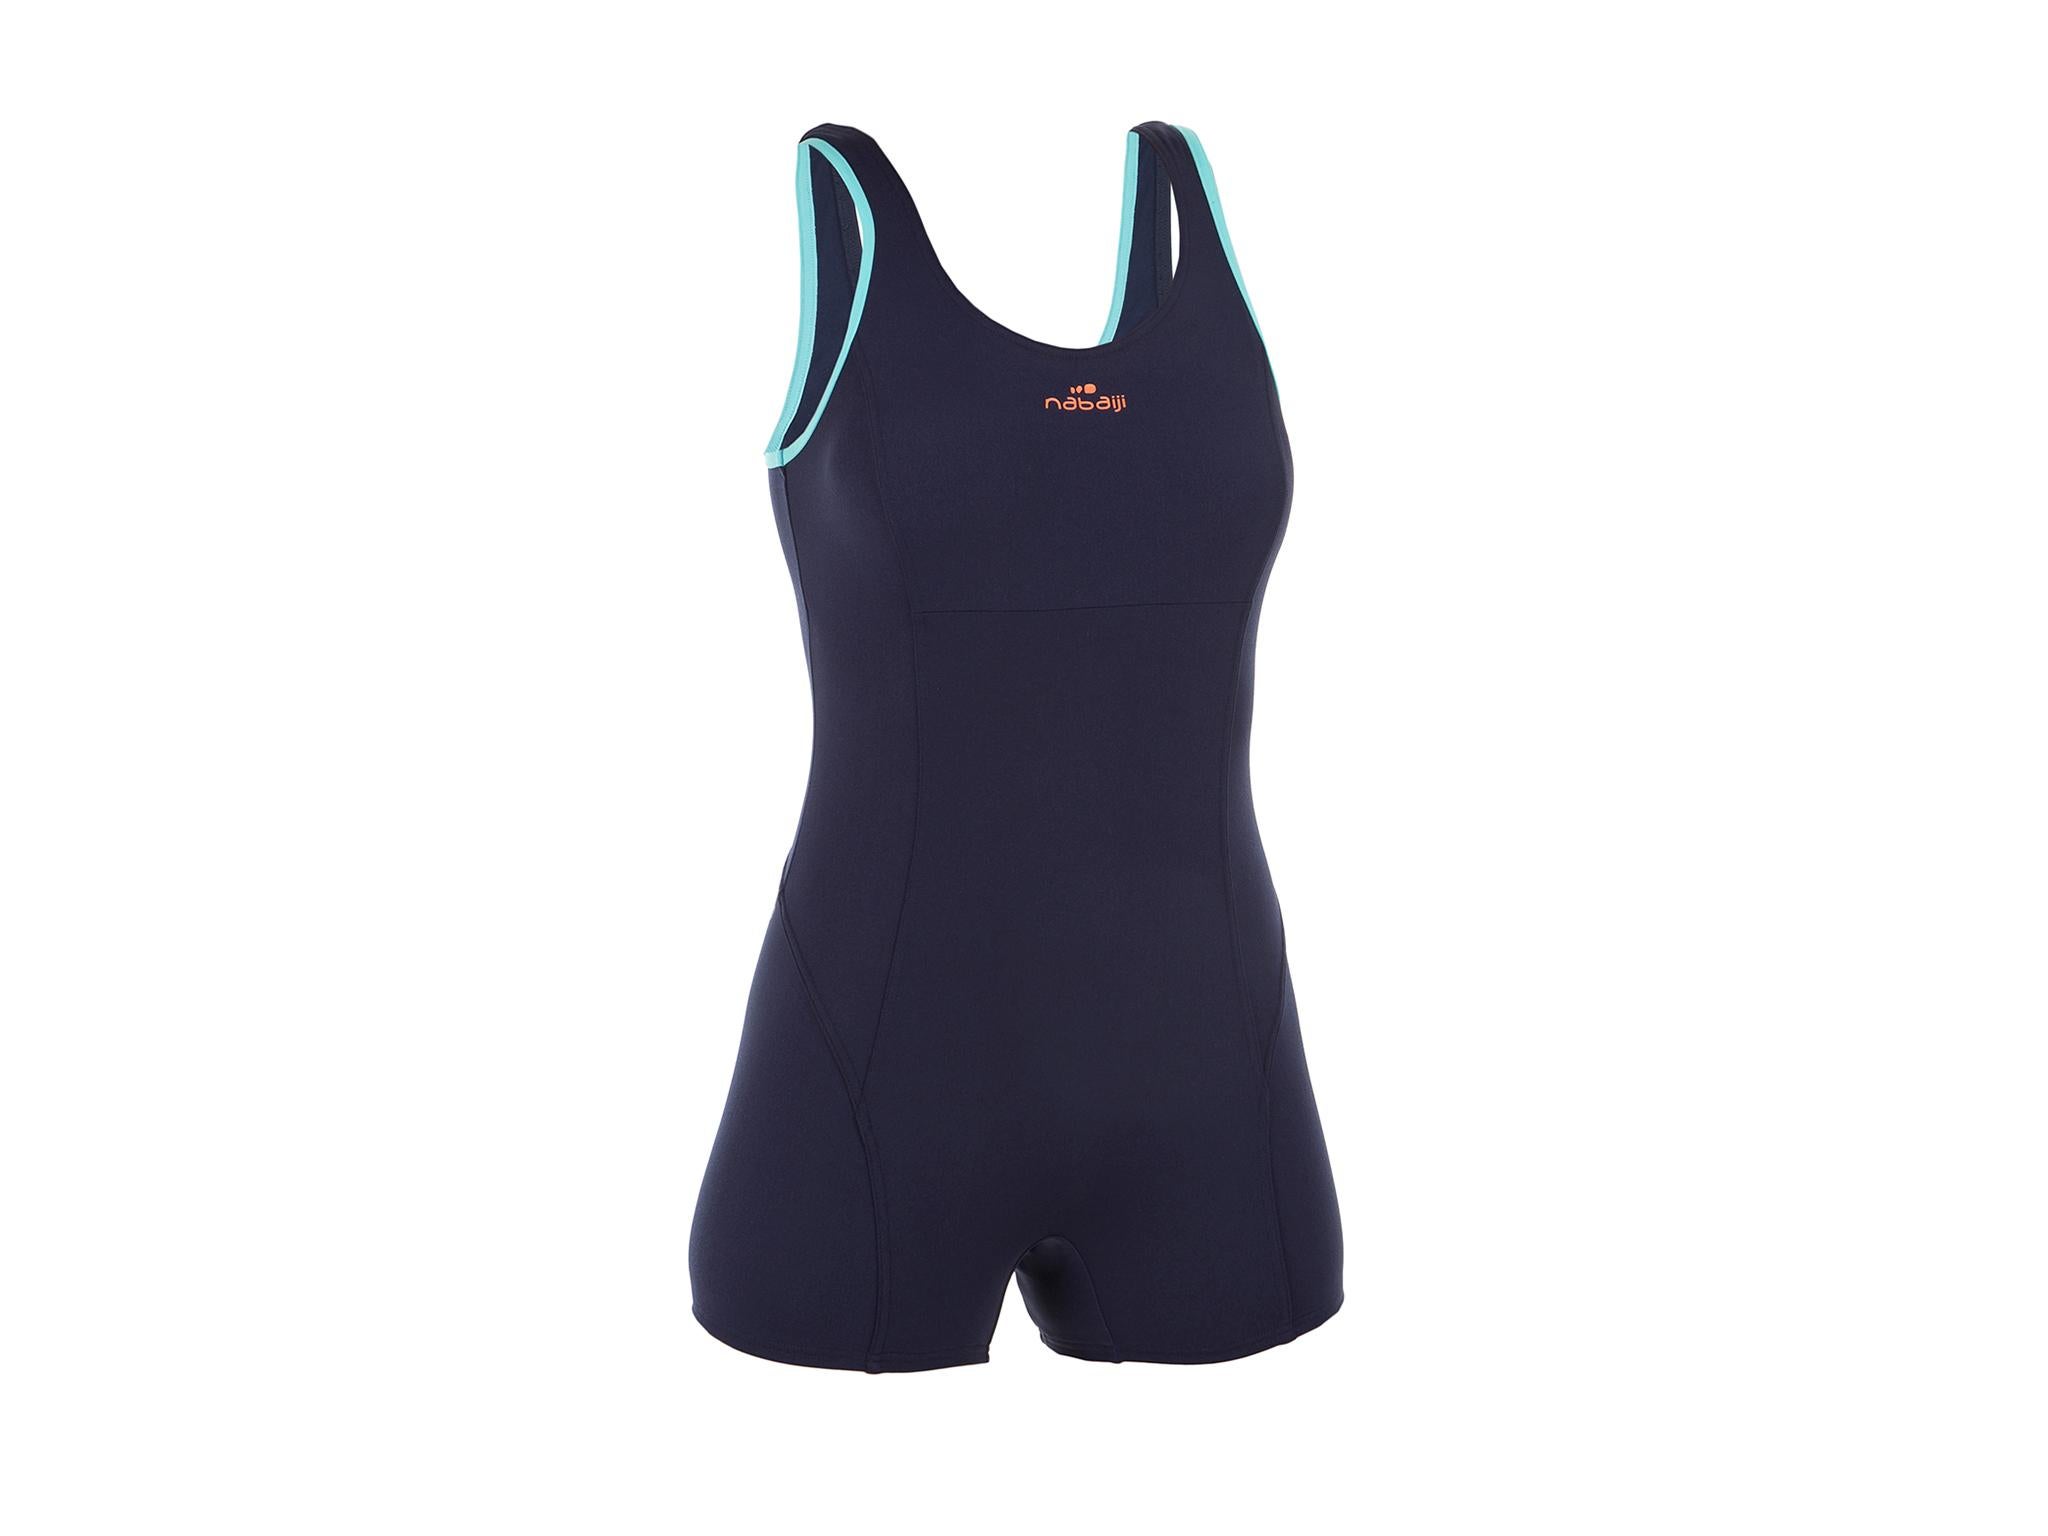 swimming costume for ladies decathlon